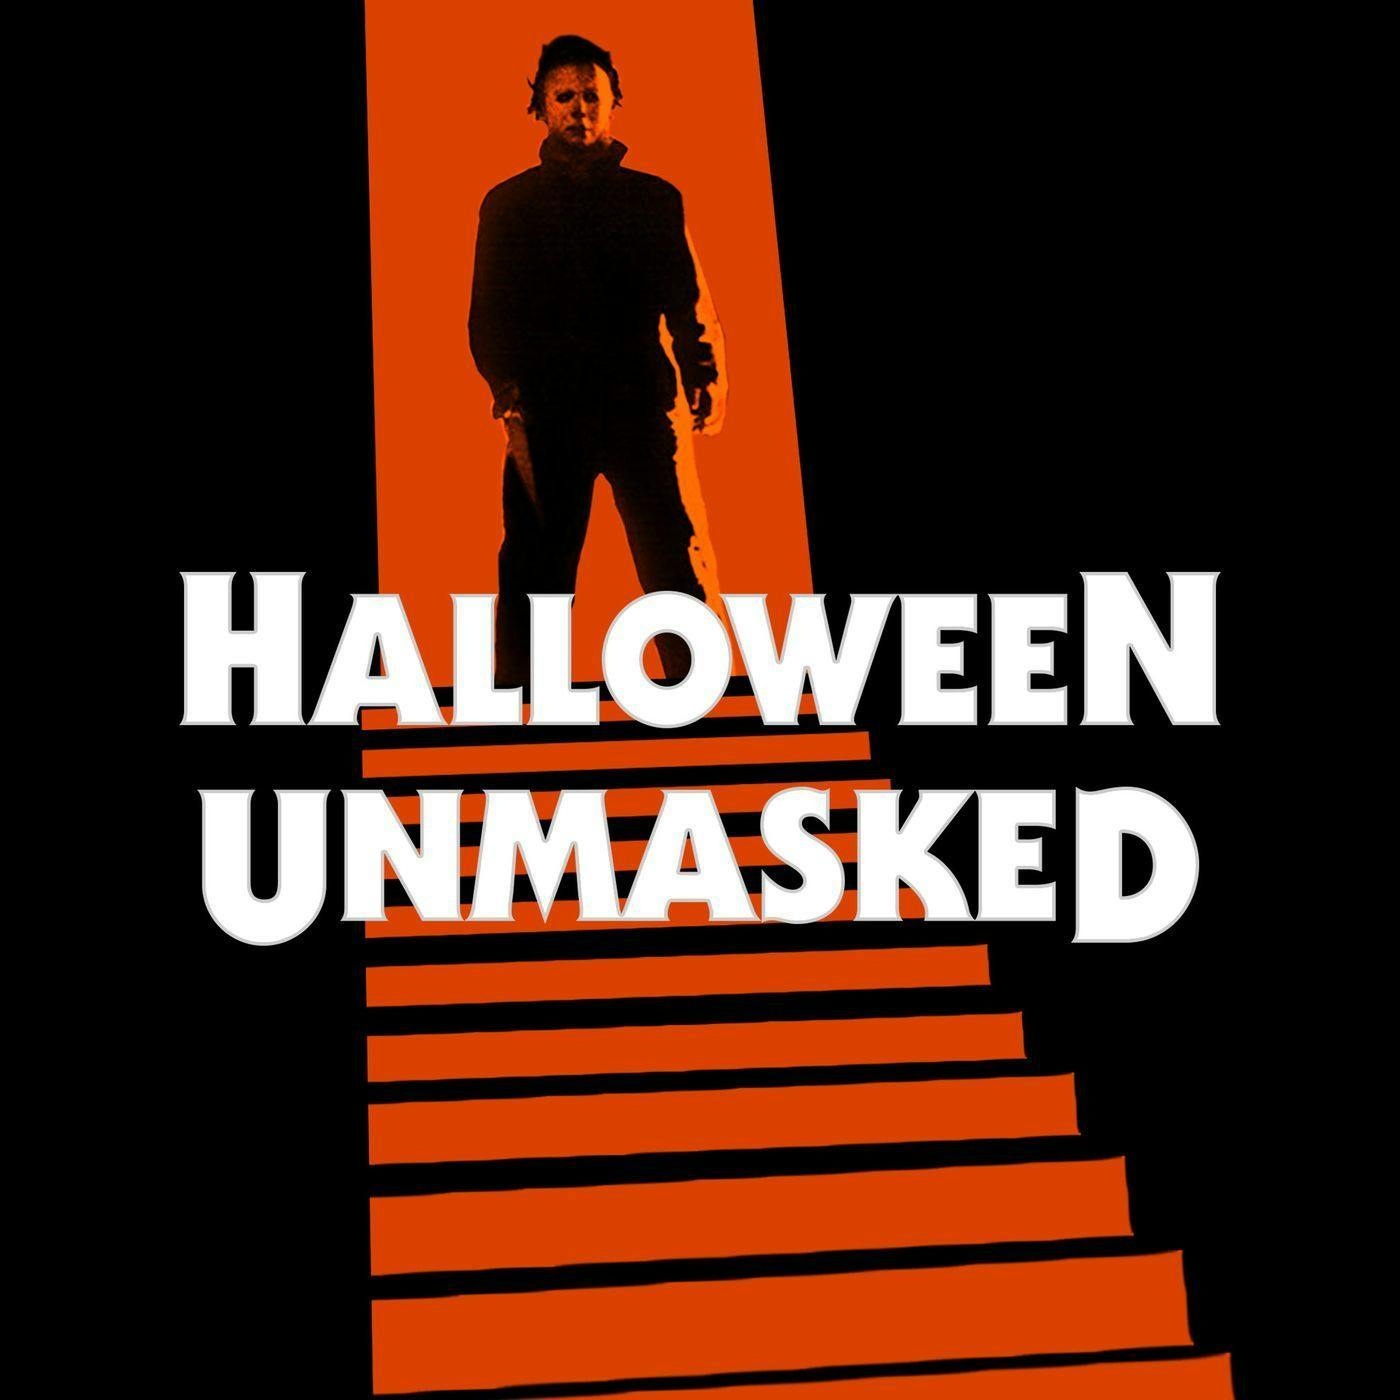 Jamie Lee Curtis: Final Girl and Hollywood Survivor | Halloween Unmasked